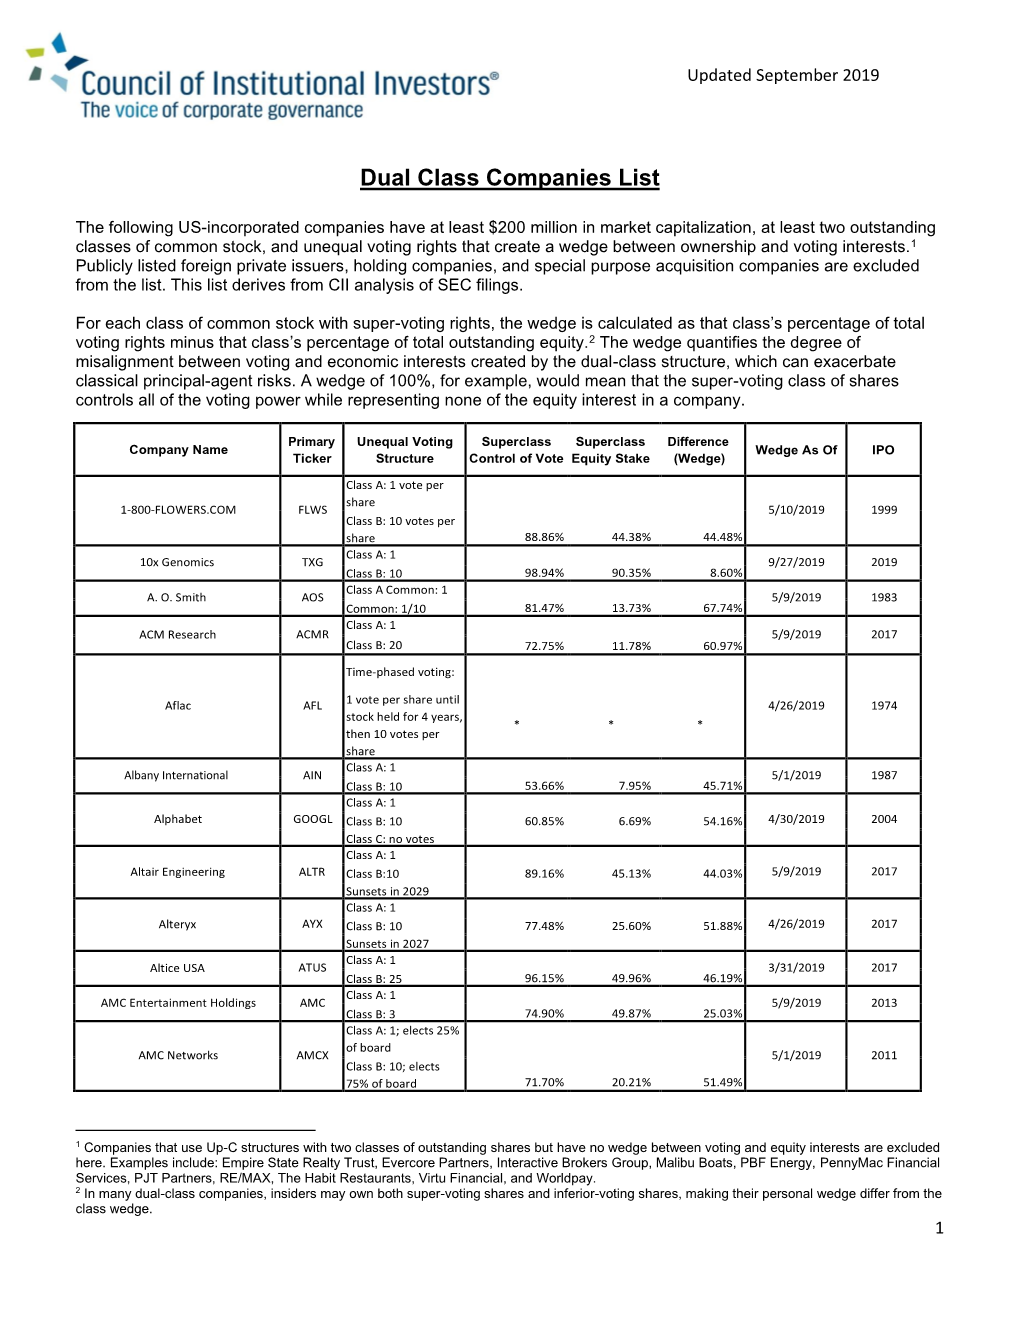 Dual Class Companies List